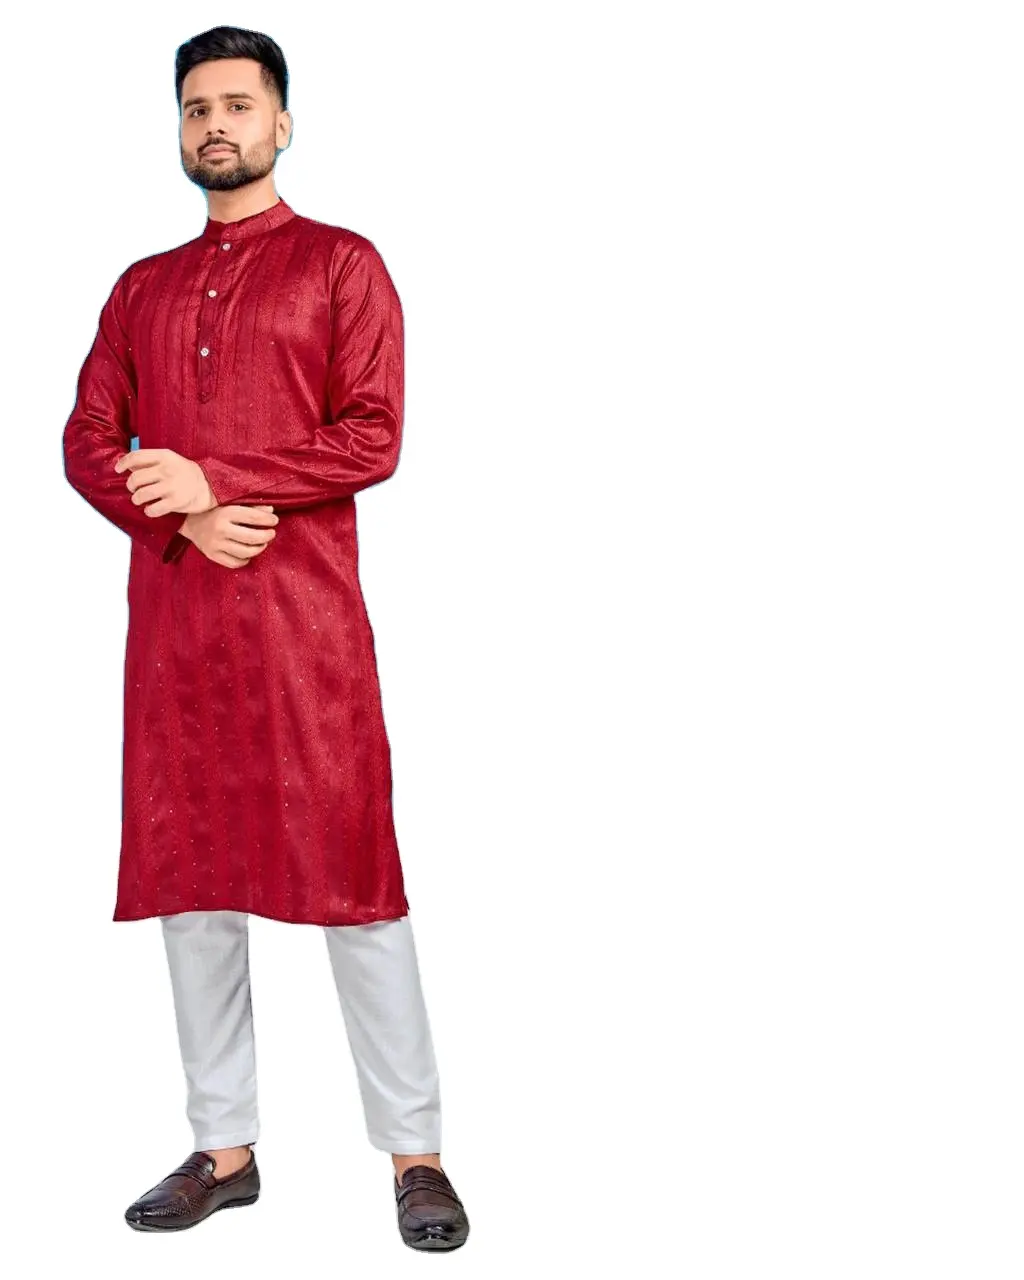 2023 Designer de Casamento especial Longo comprimento Semi Costurado indiano Pathani Ternos para Vestido personalizado camiseta dos homens